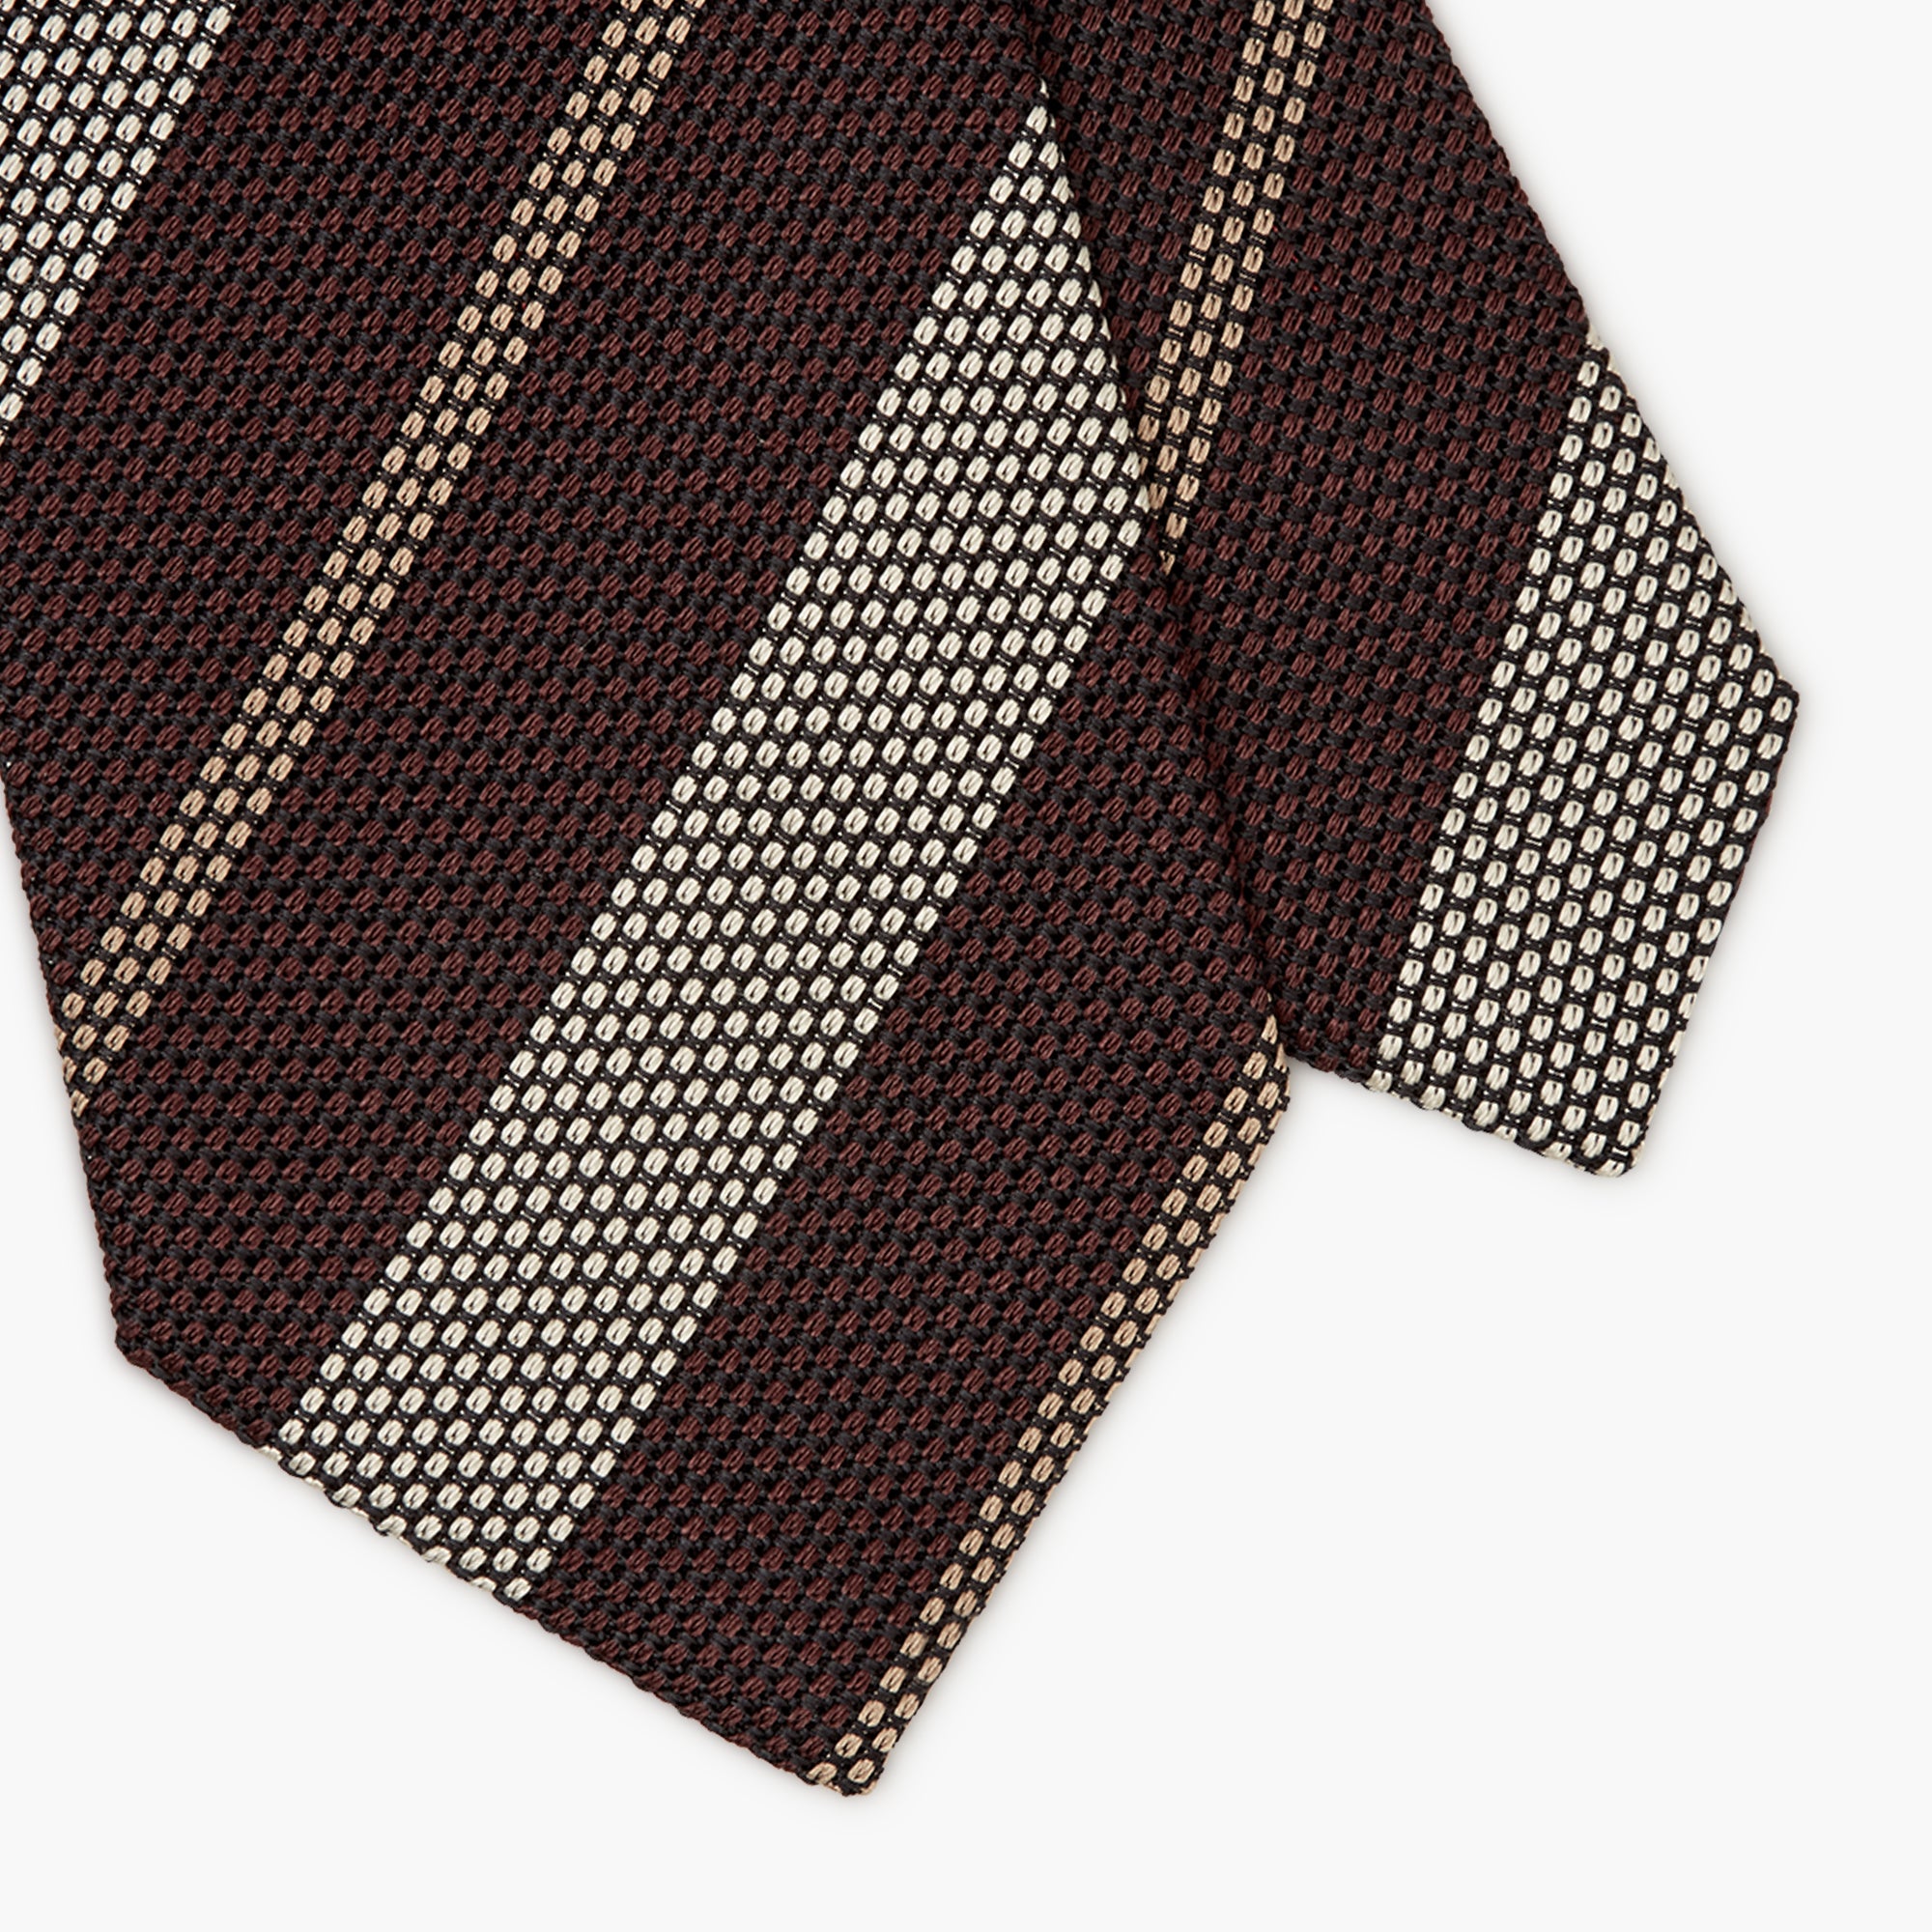 3-Fold Multi Stripe Grenadine Silk Tie - Burgundy Red Cream